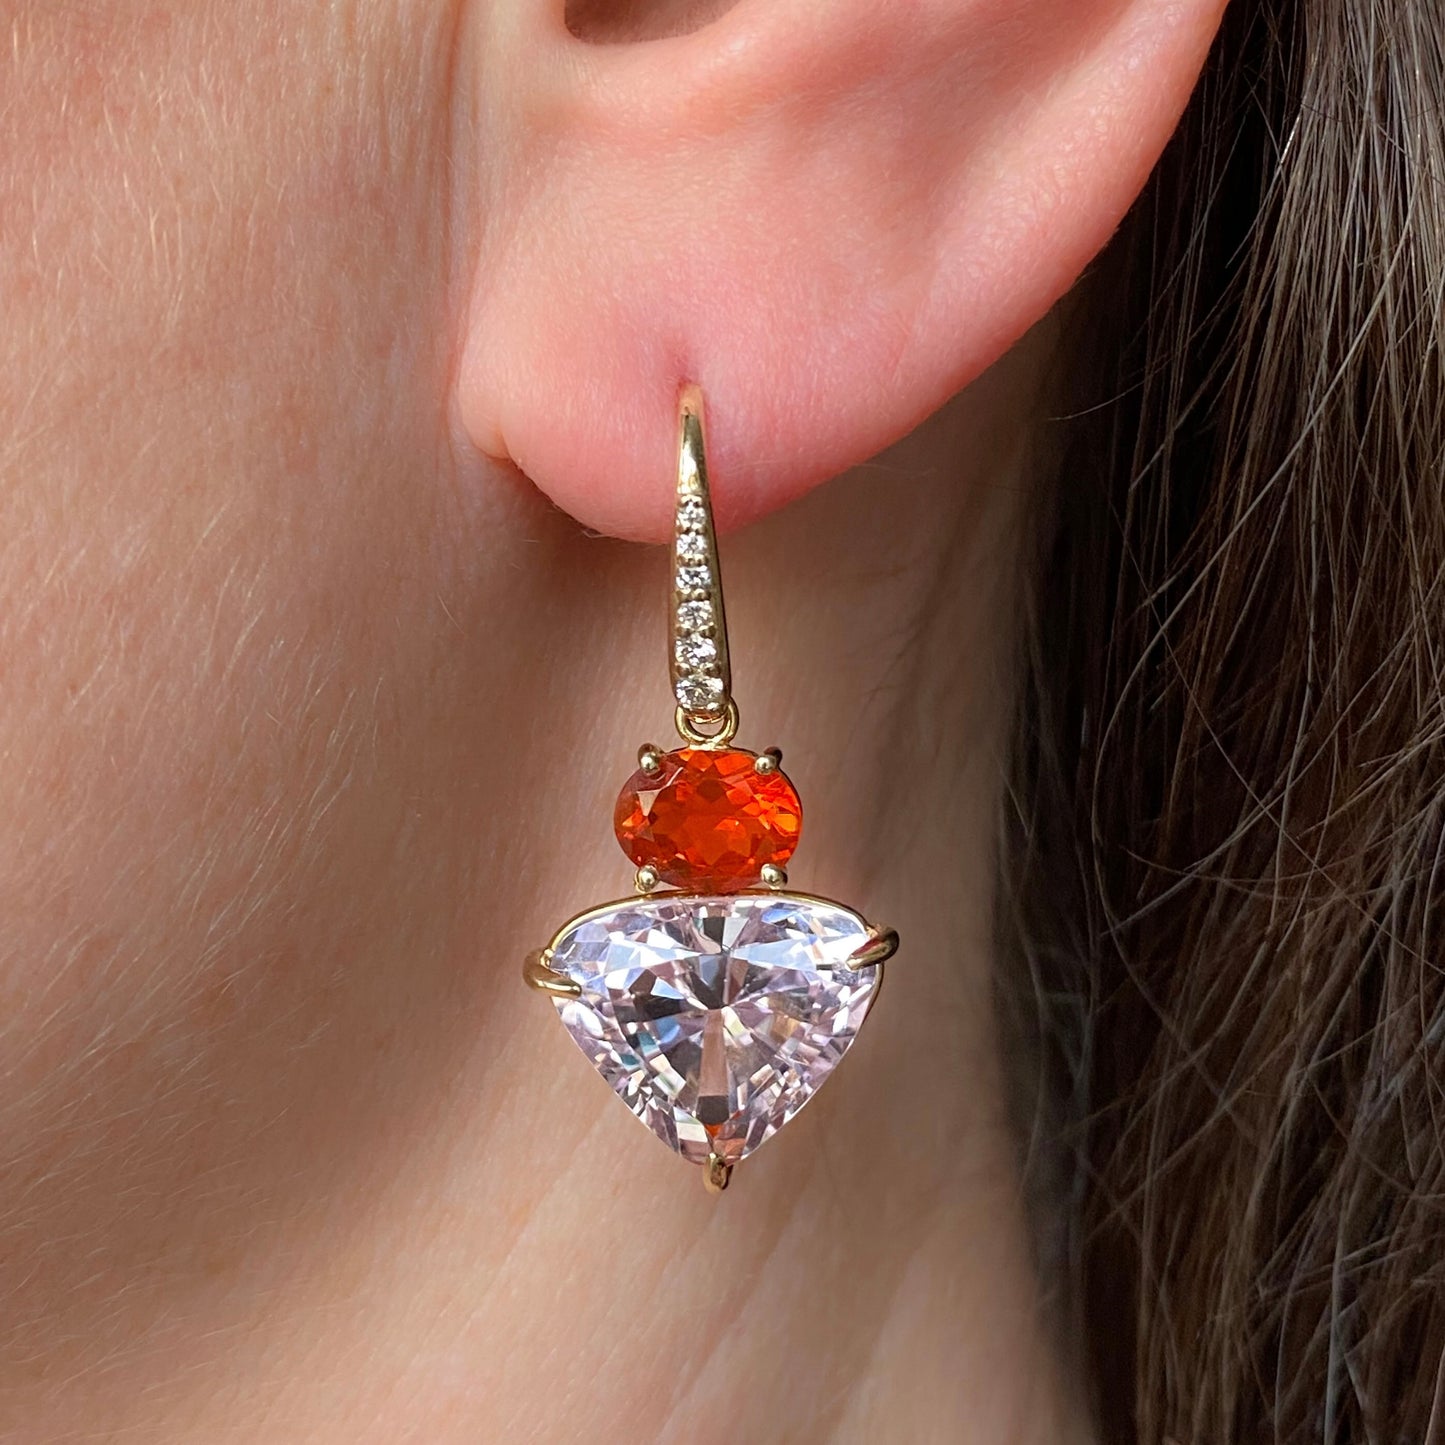 Earrings with stackable pendants